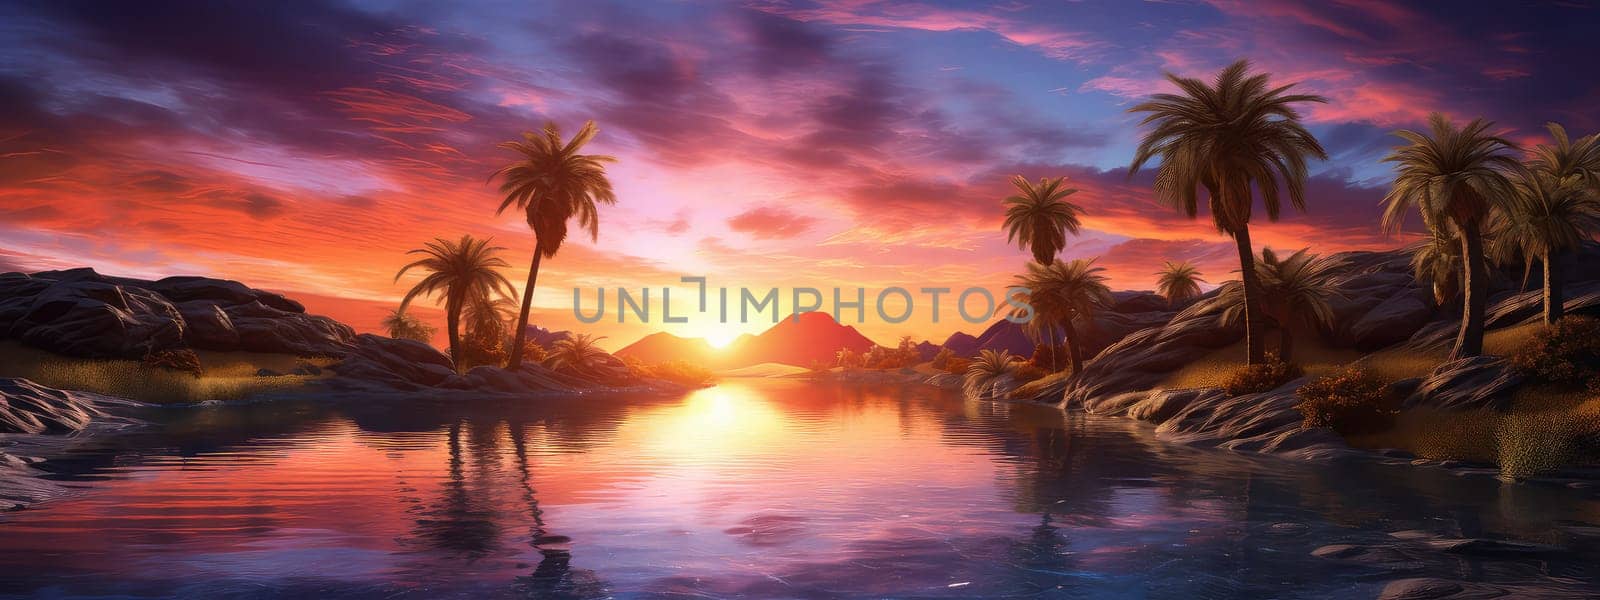 Desert oasis at sunset photo realistic illustration - Generative AI. by simakovavector